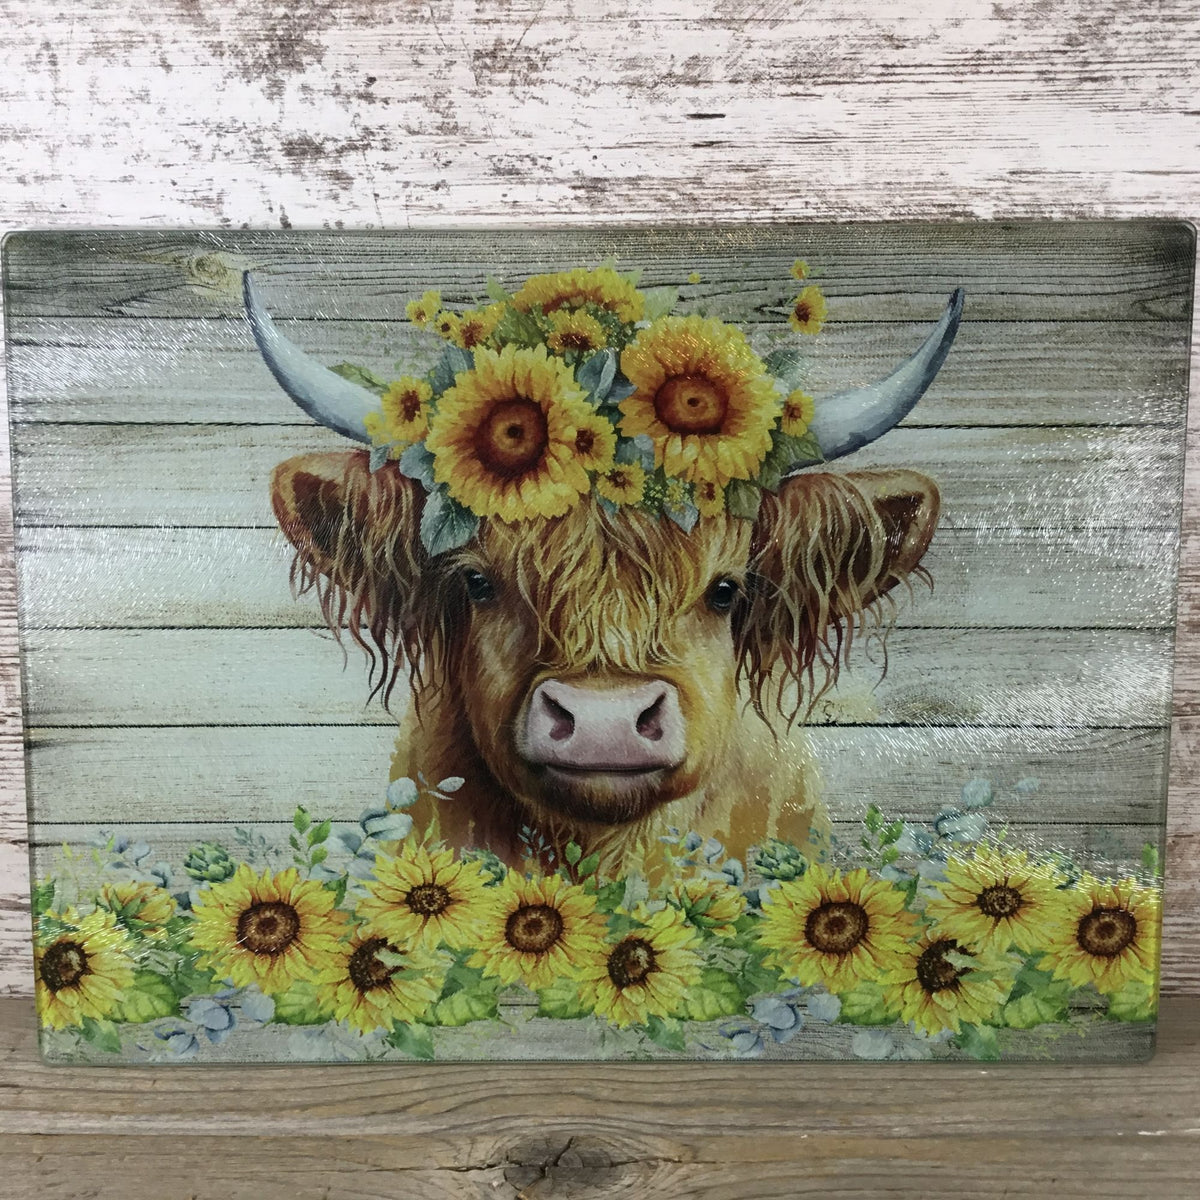 Sunny Highland Cow Fabric Highland Cow With A Sunflower Garland